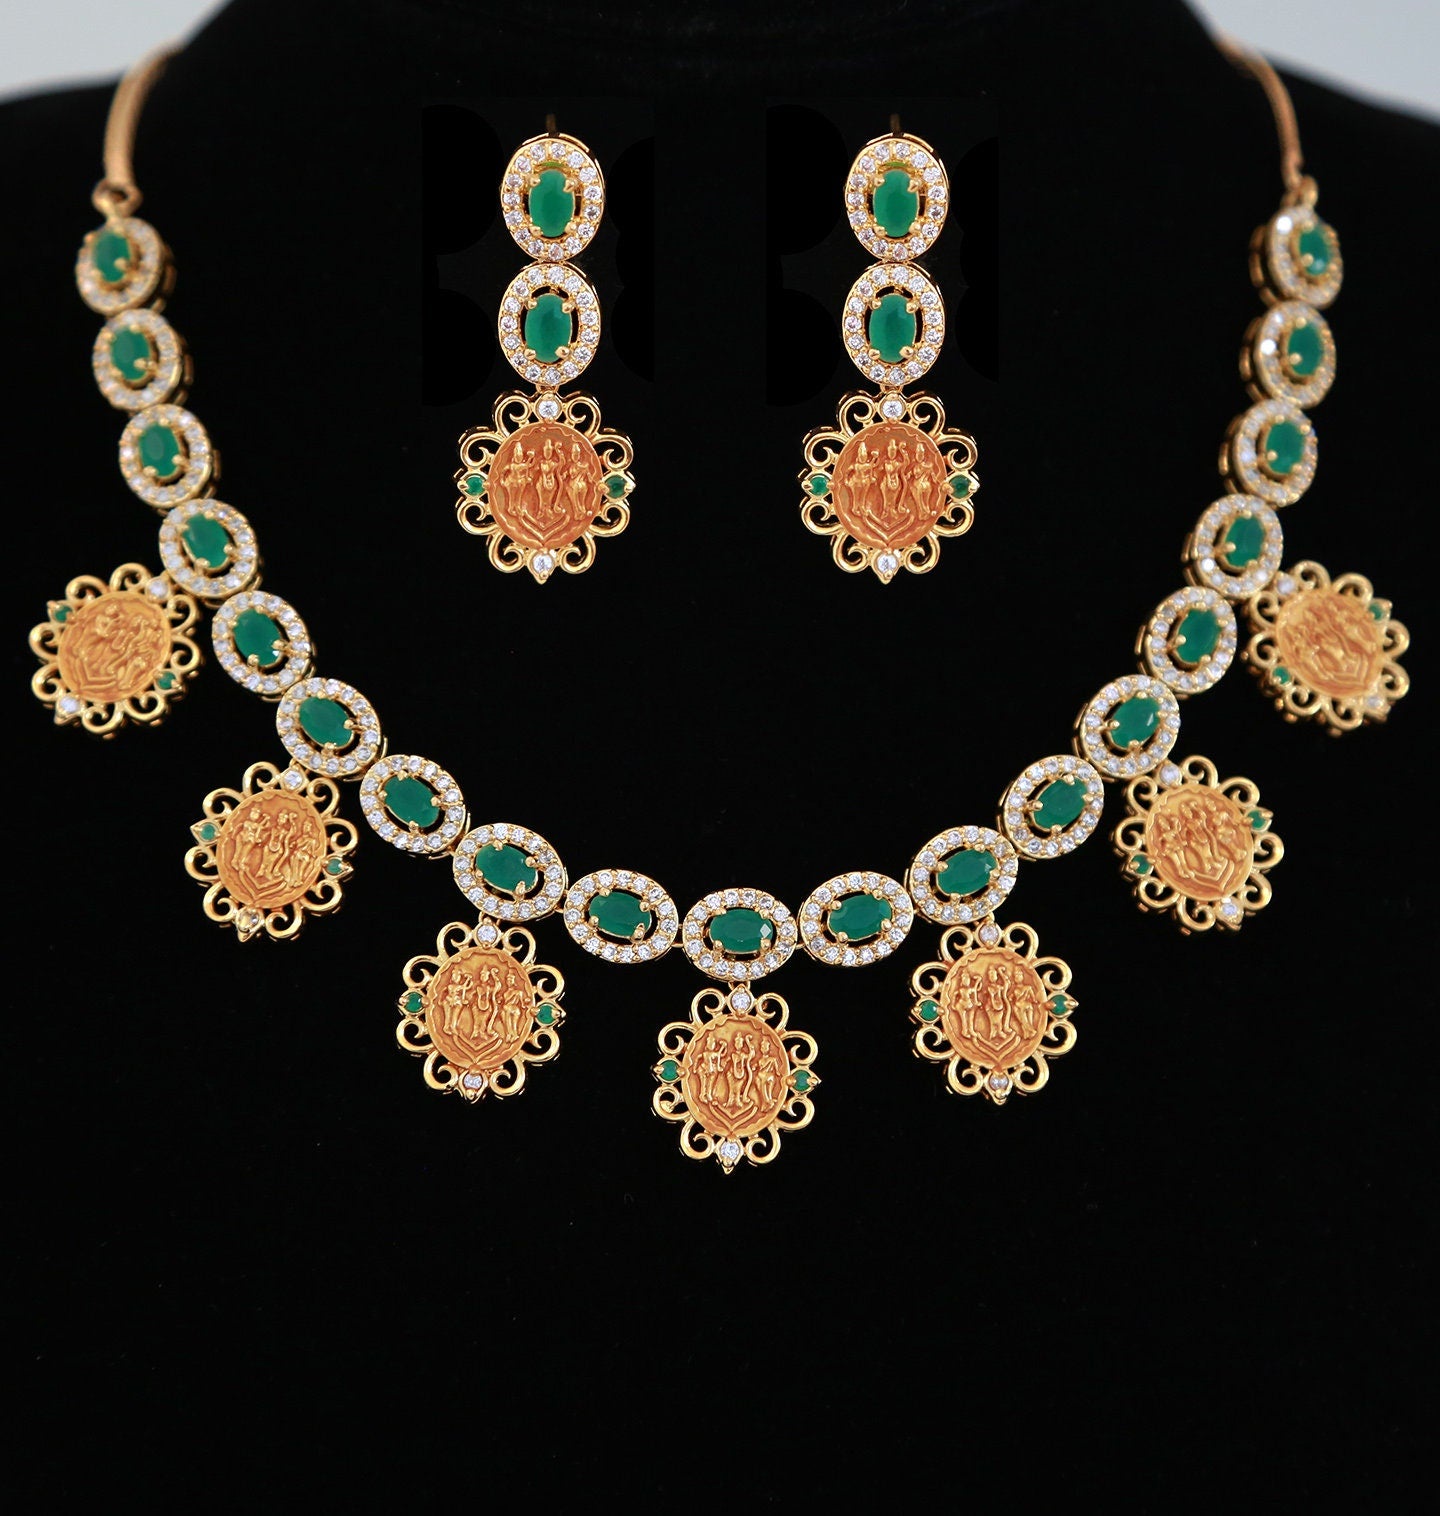 Buy Ram parivar necklace gold Designs | South Indian Temple jewelry Designs in Gold | 22K Ramparivar coin necklace | Gold plated necklace